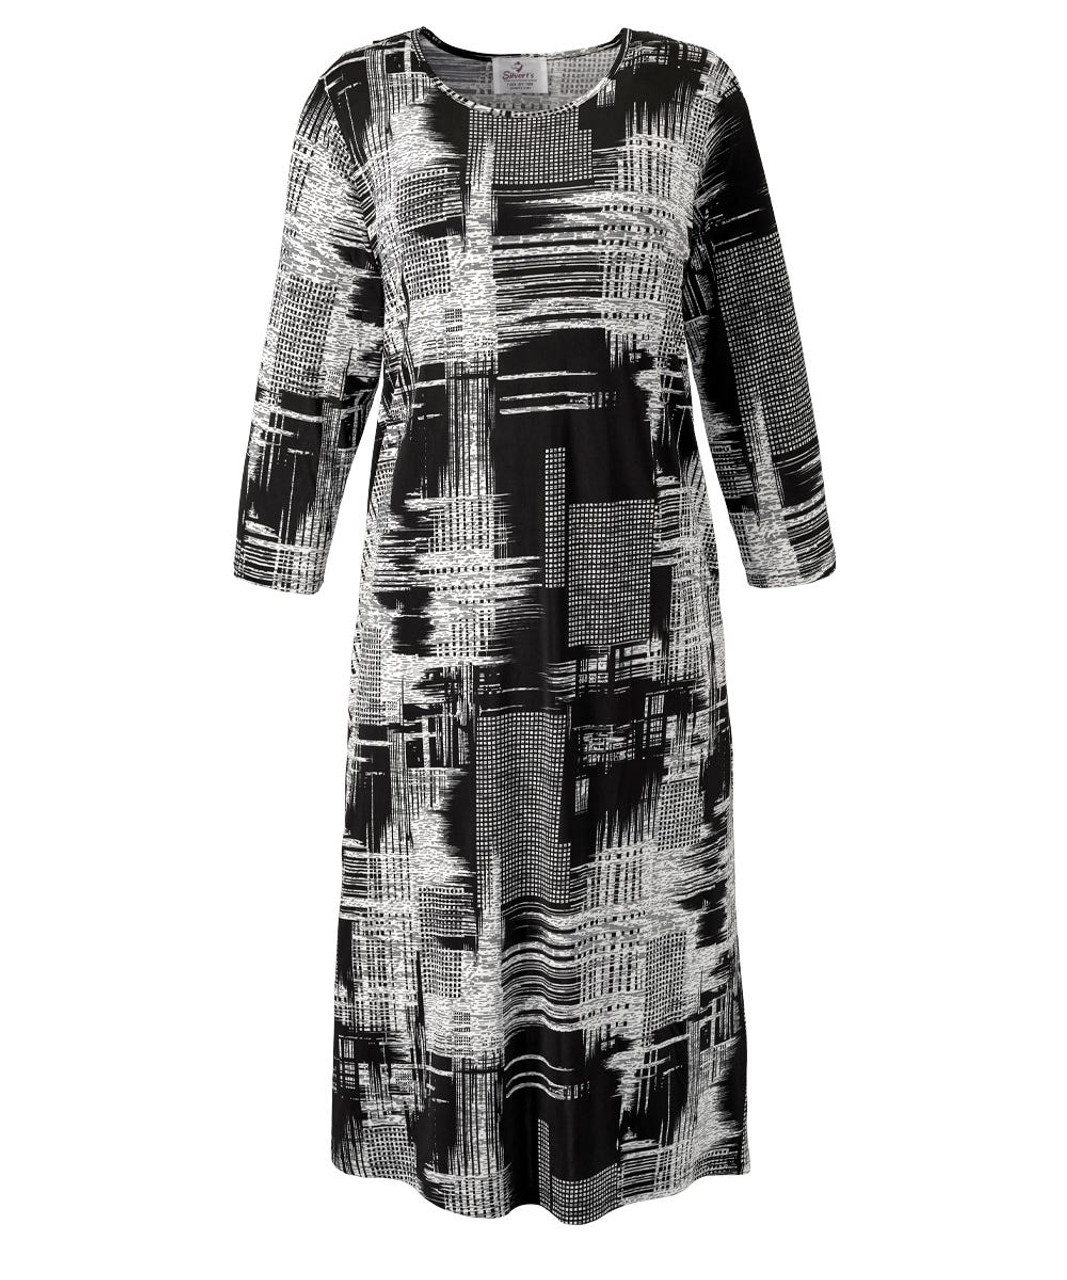 Silverts SV21110 Elegant Open Back Dress for Women Black Abstract, Size=XL, SV21110-SV1333-XL